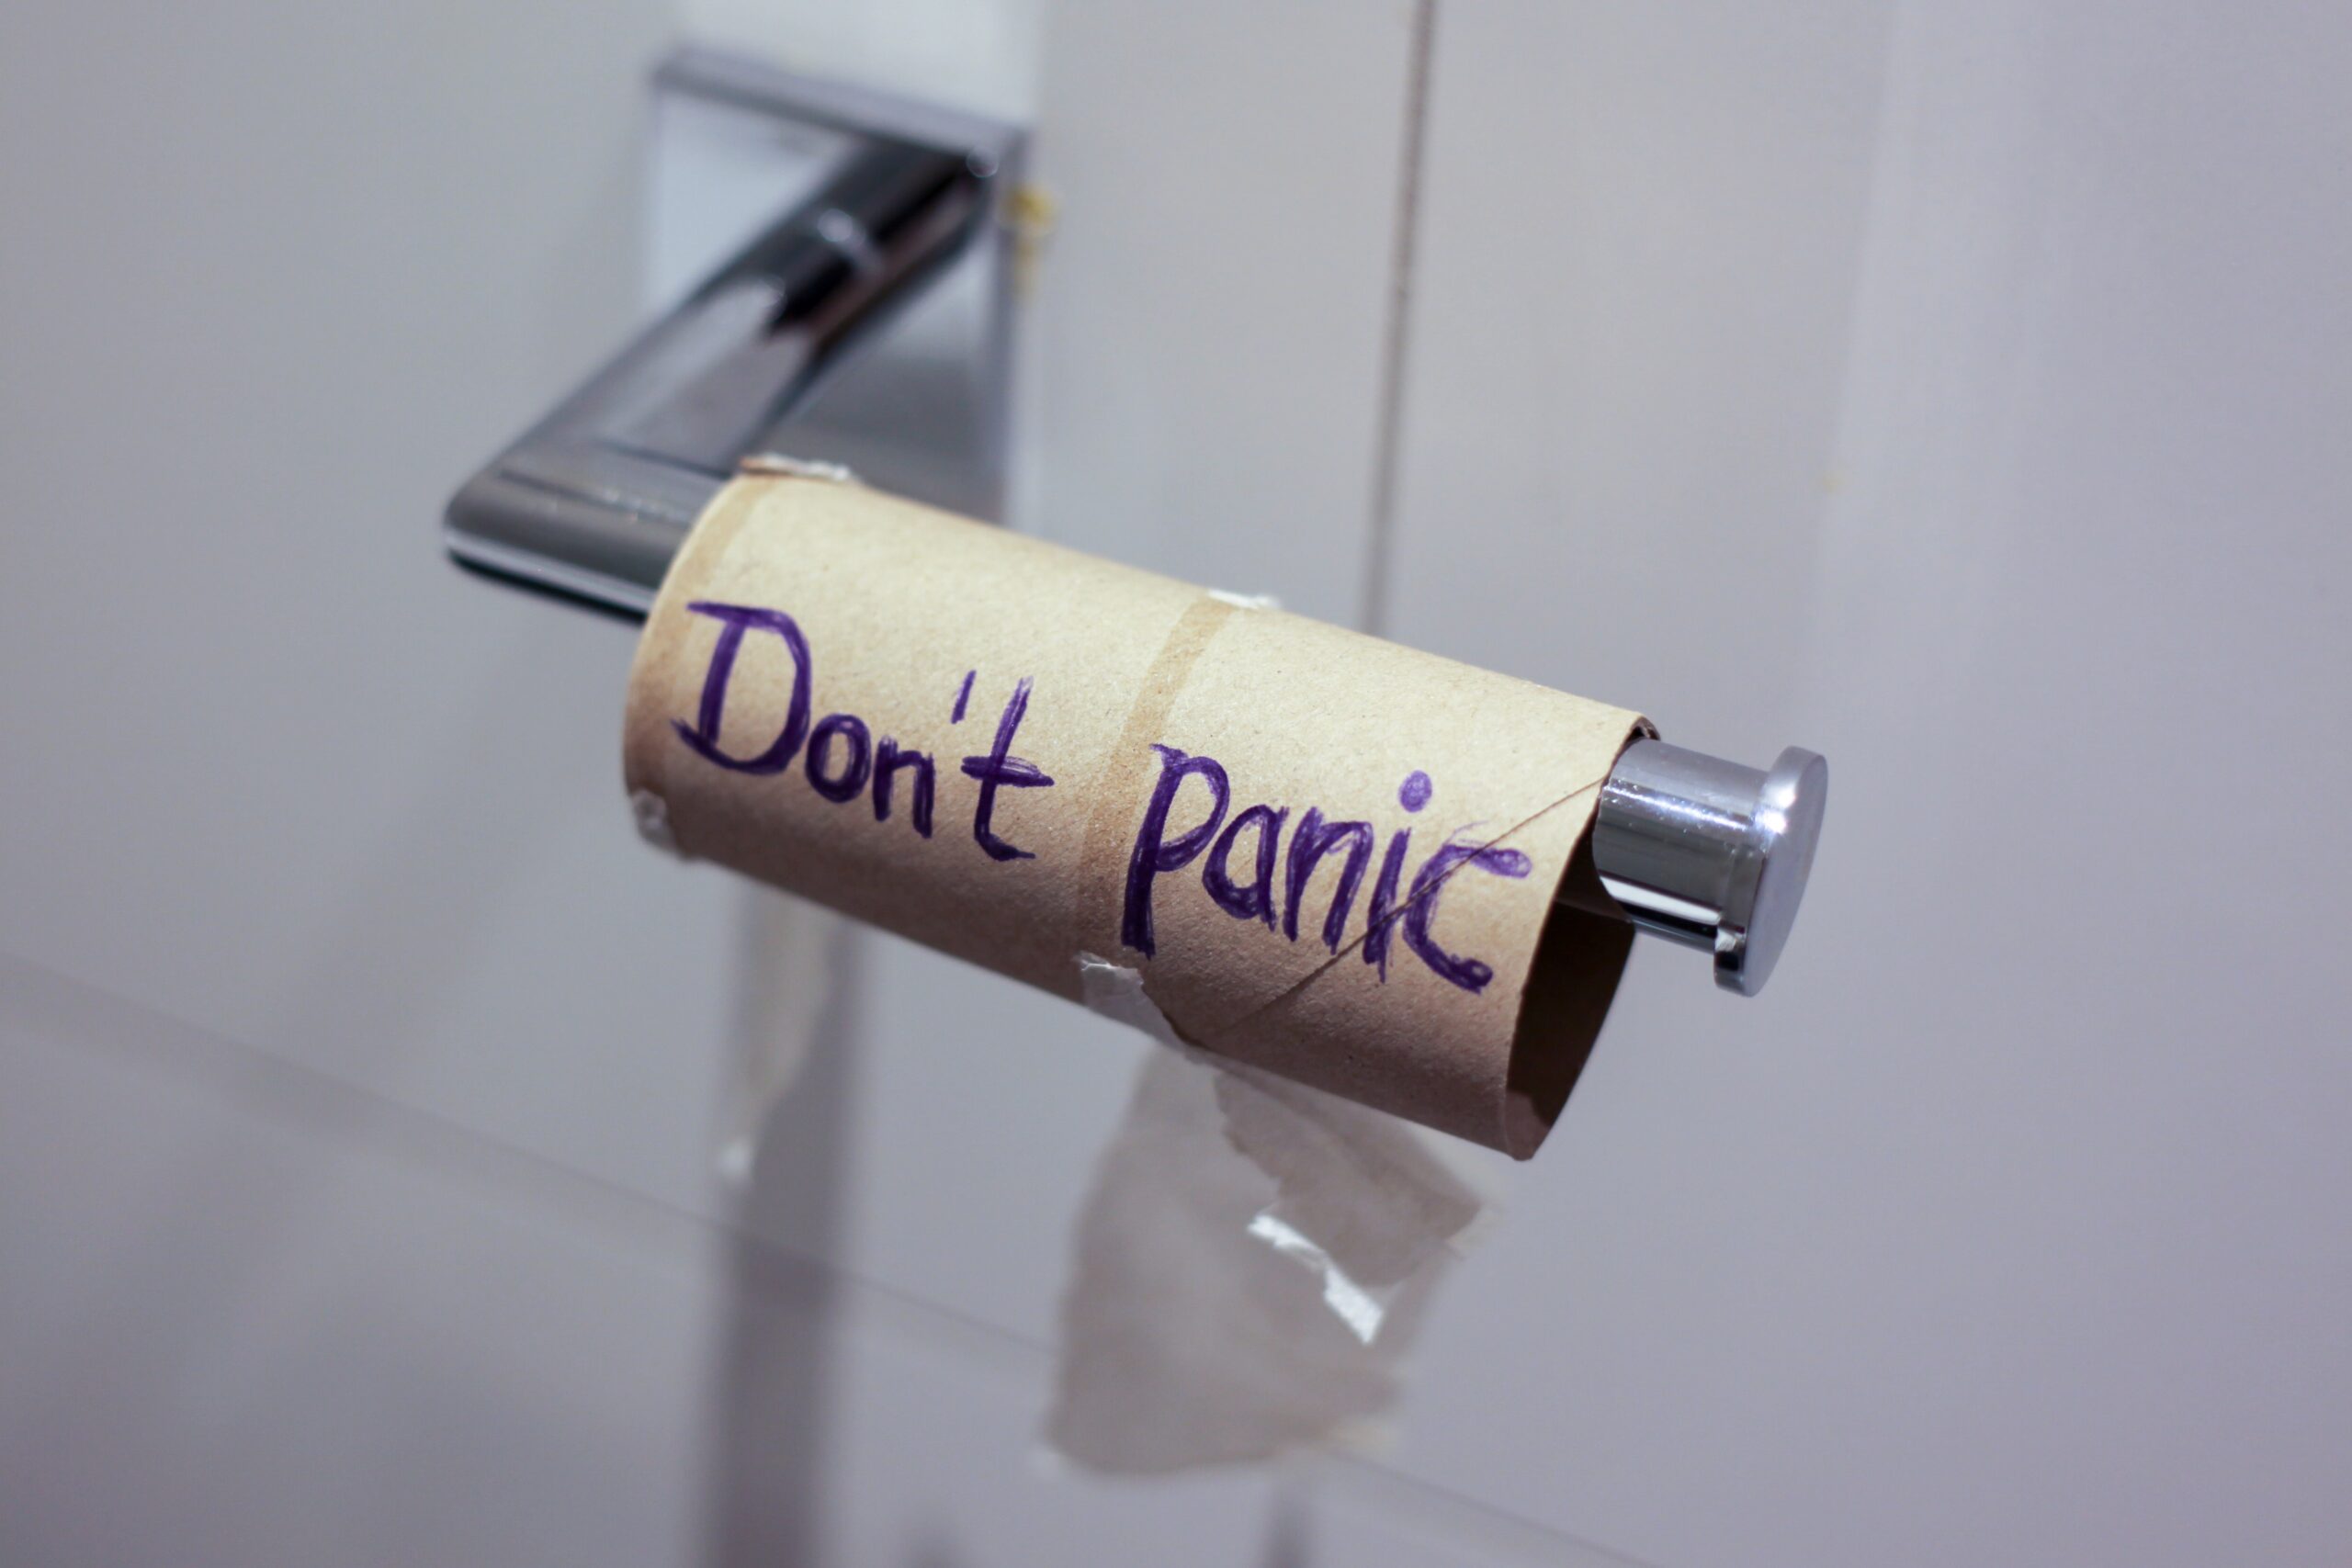 Don't panic written on empty TP roll